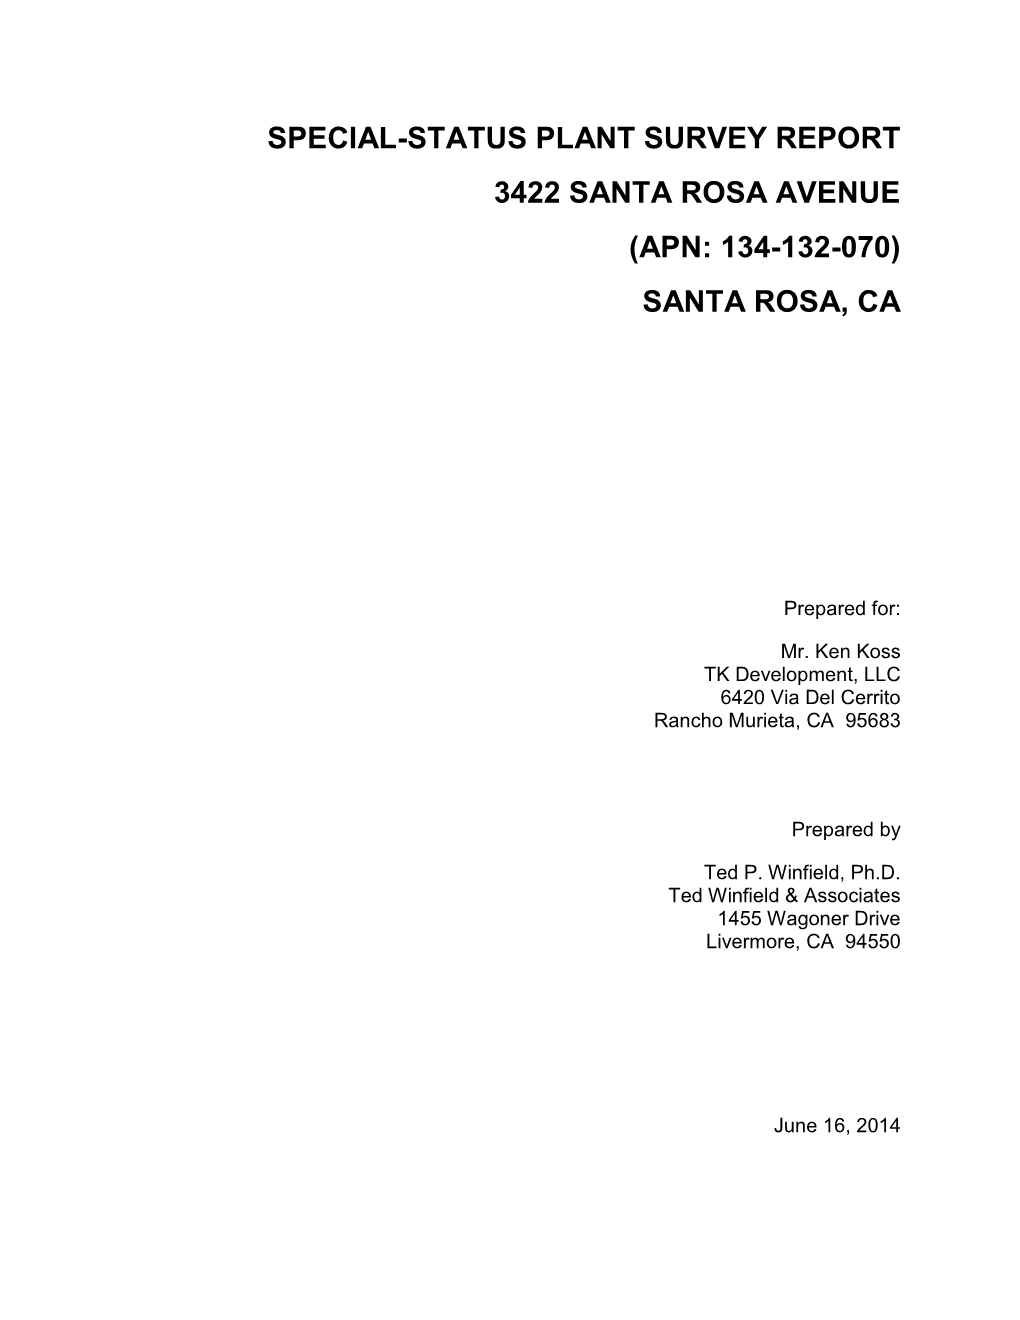 Special-Status Plant Survey Report 3422 Santa Rosa Avenue (Apn: 134-132-070) Santa Rosa, Ca